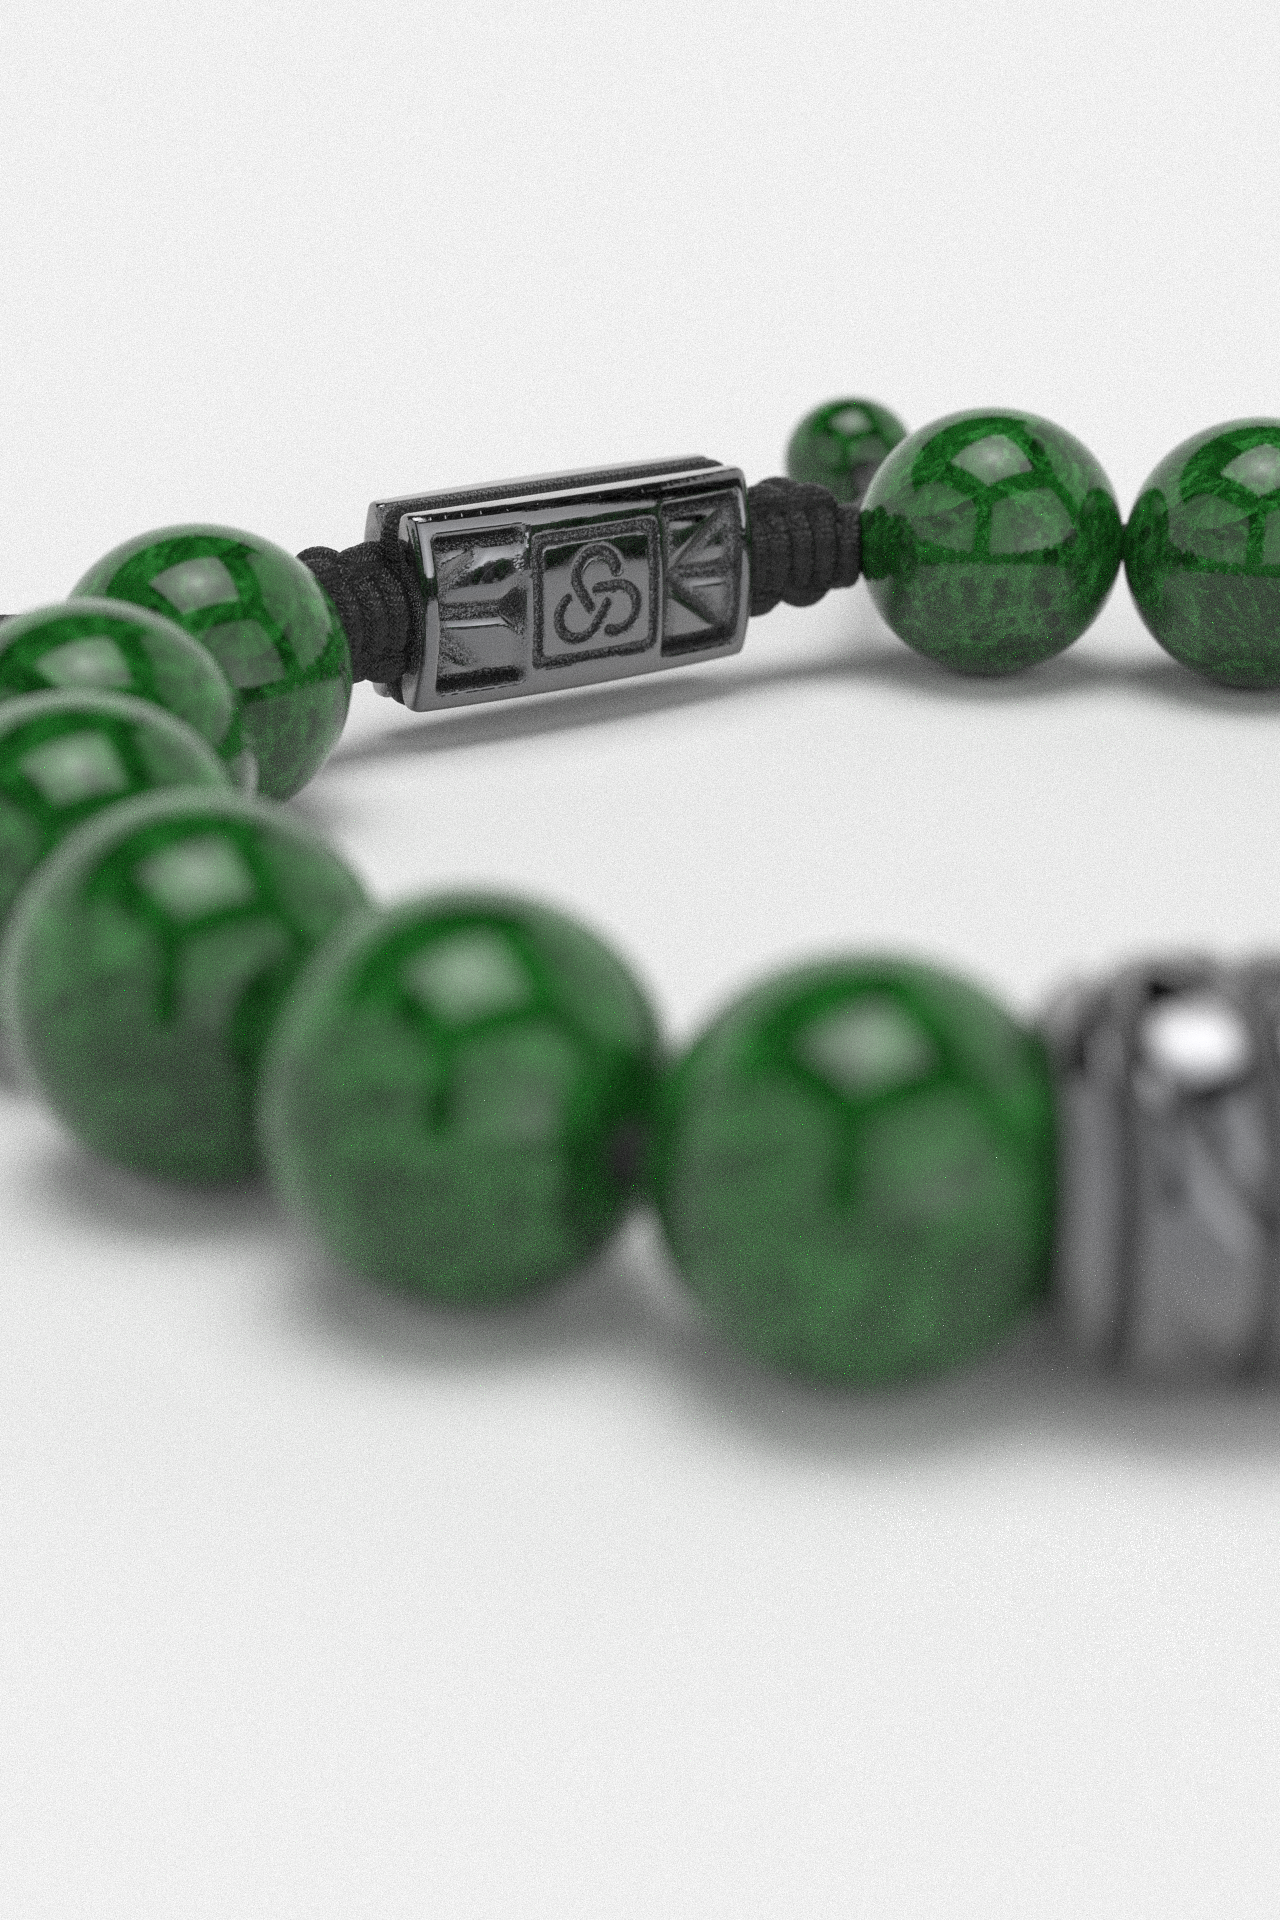 Emerald Jade Bracelet 12mm | Woven